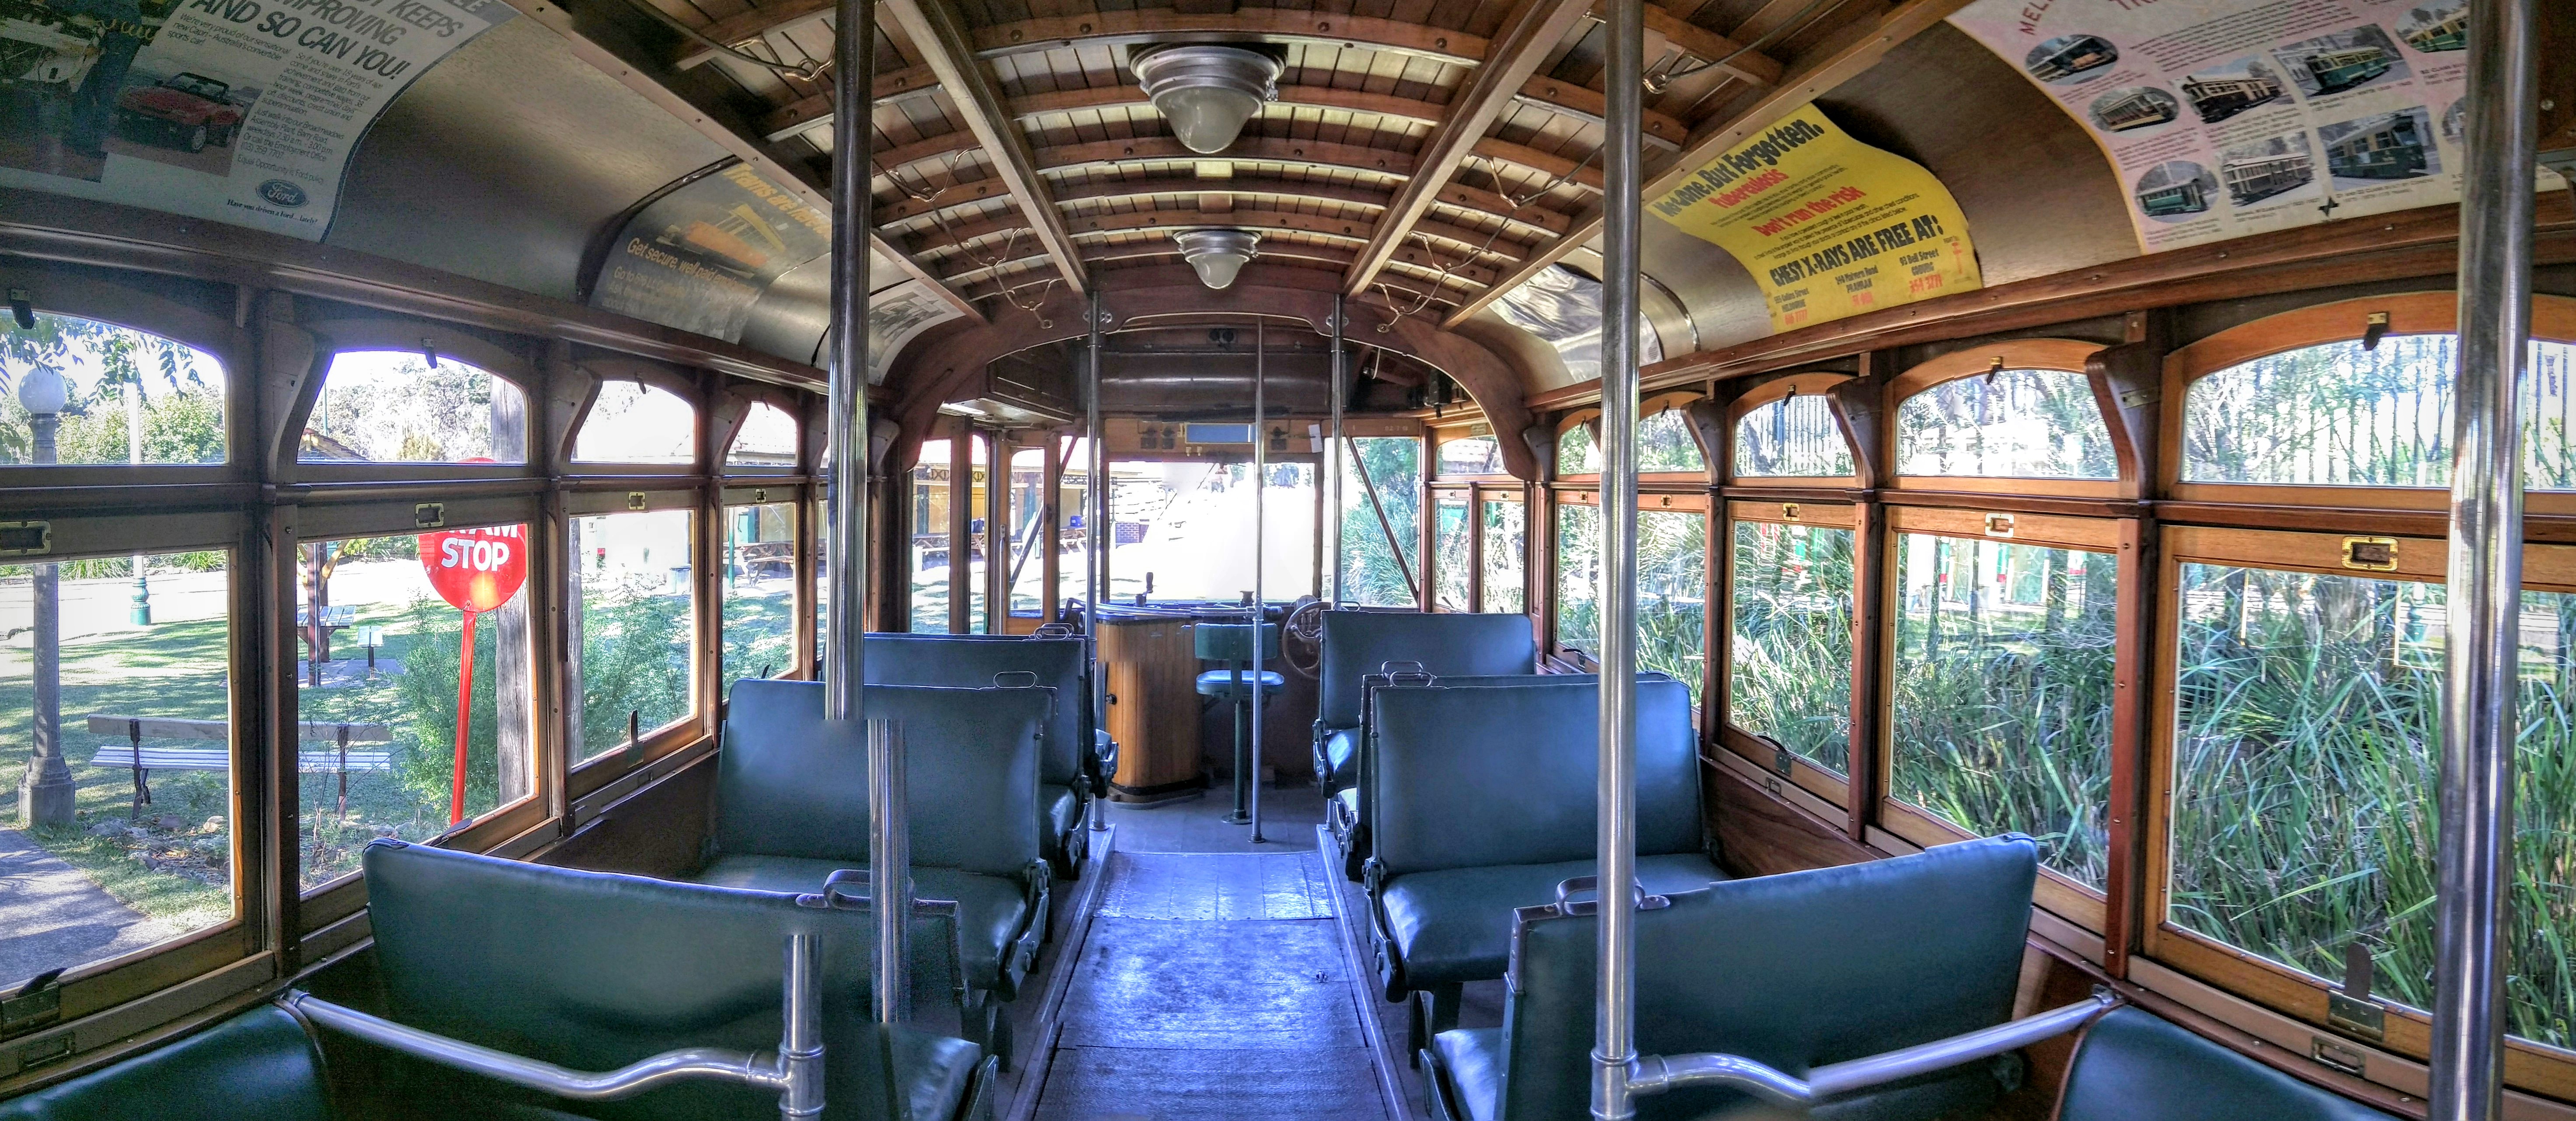 File:Tram interior edit1.jpg - Wikipedia